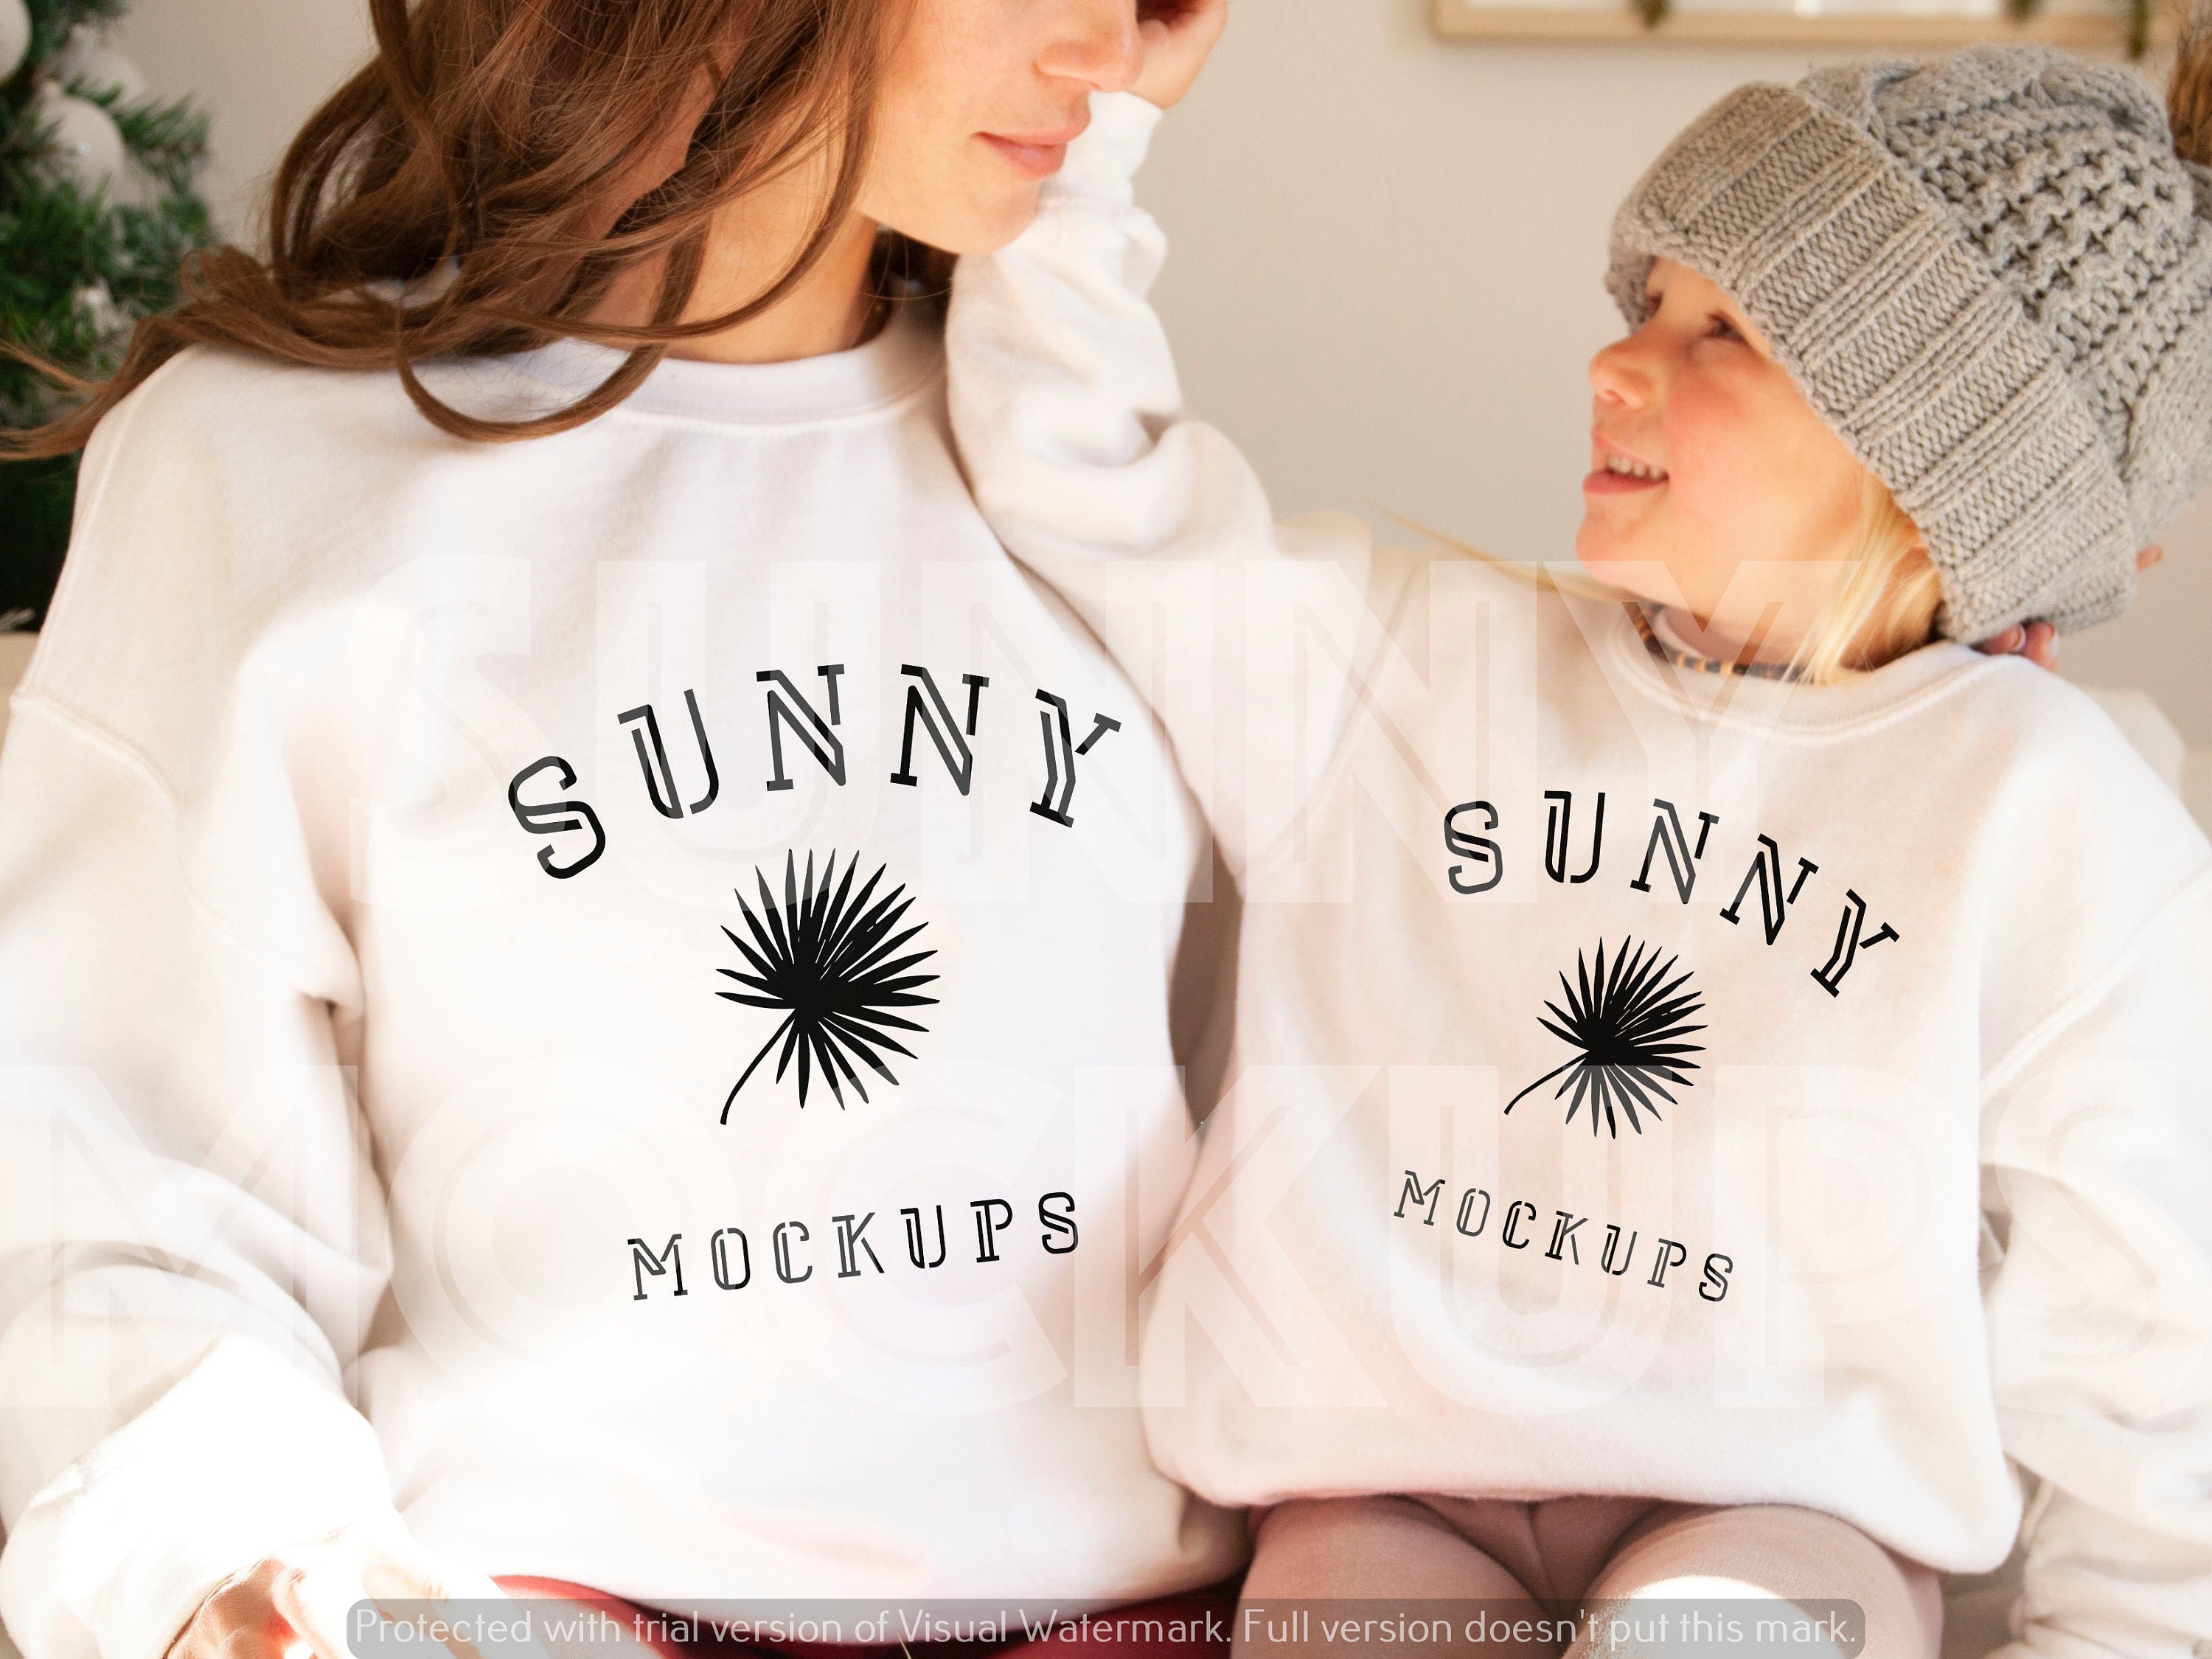 Mommy + Me designer streetsign Sweatshirt – Something Nice Graphic